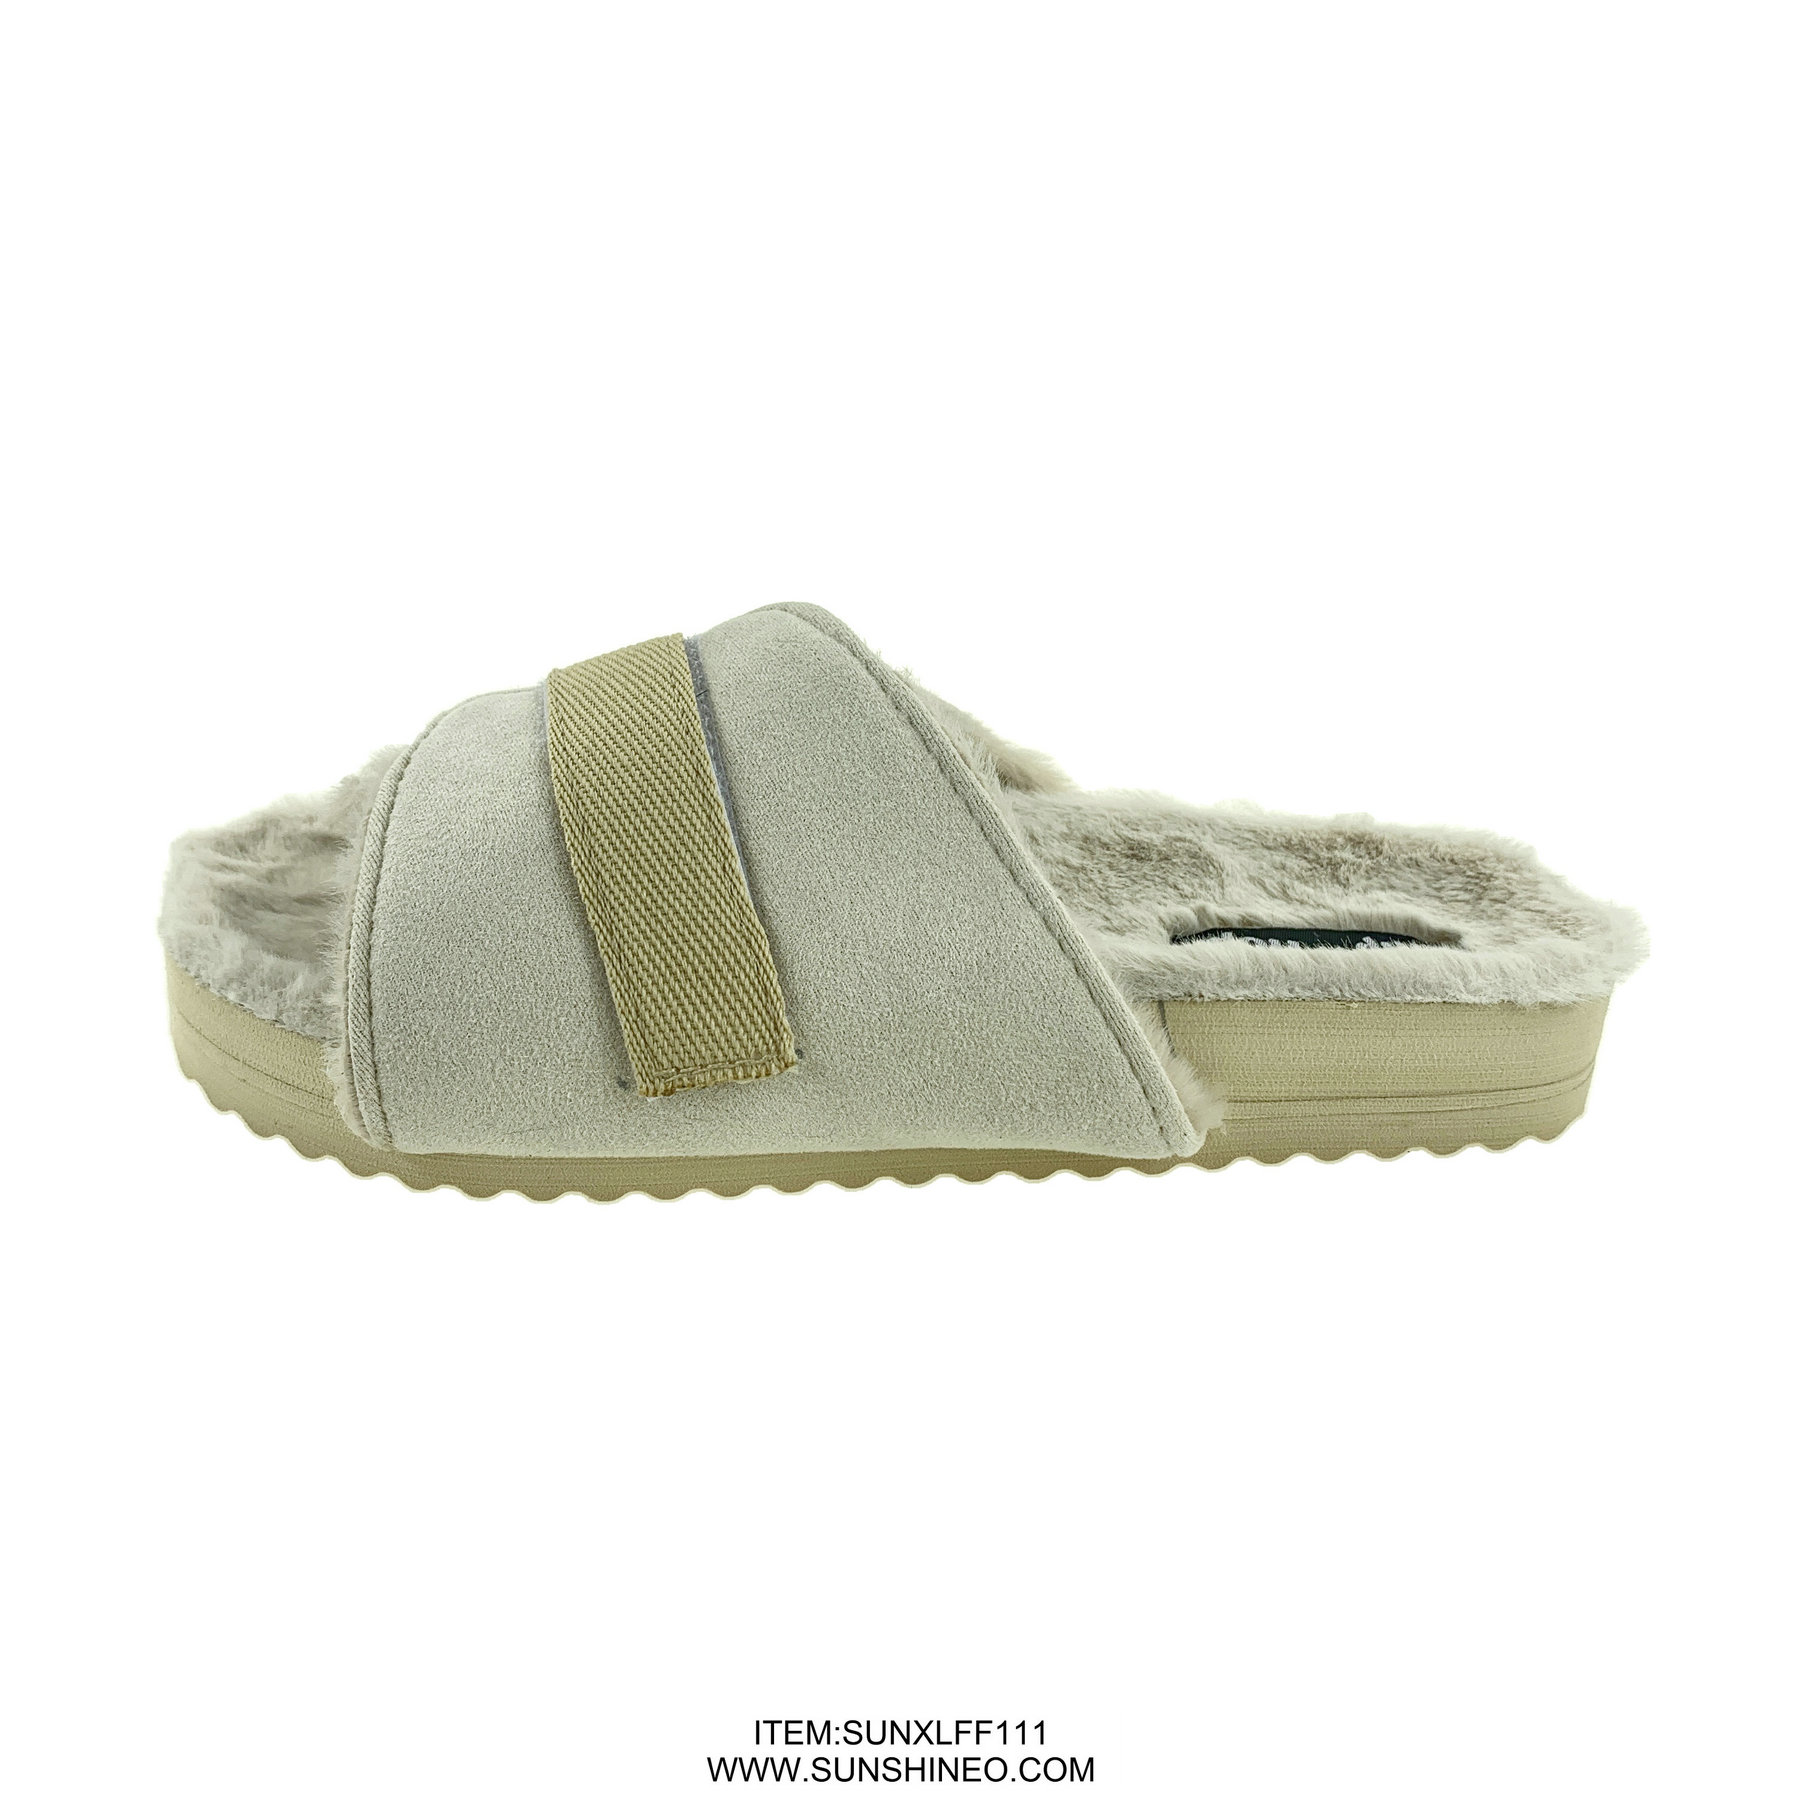 SUNXLFF111 fur flip flop sandals winter slippers